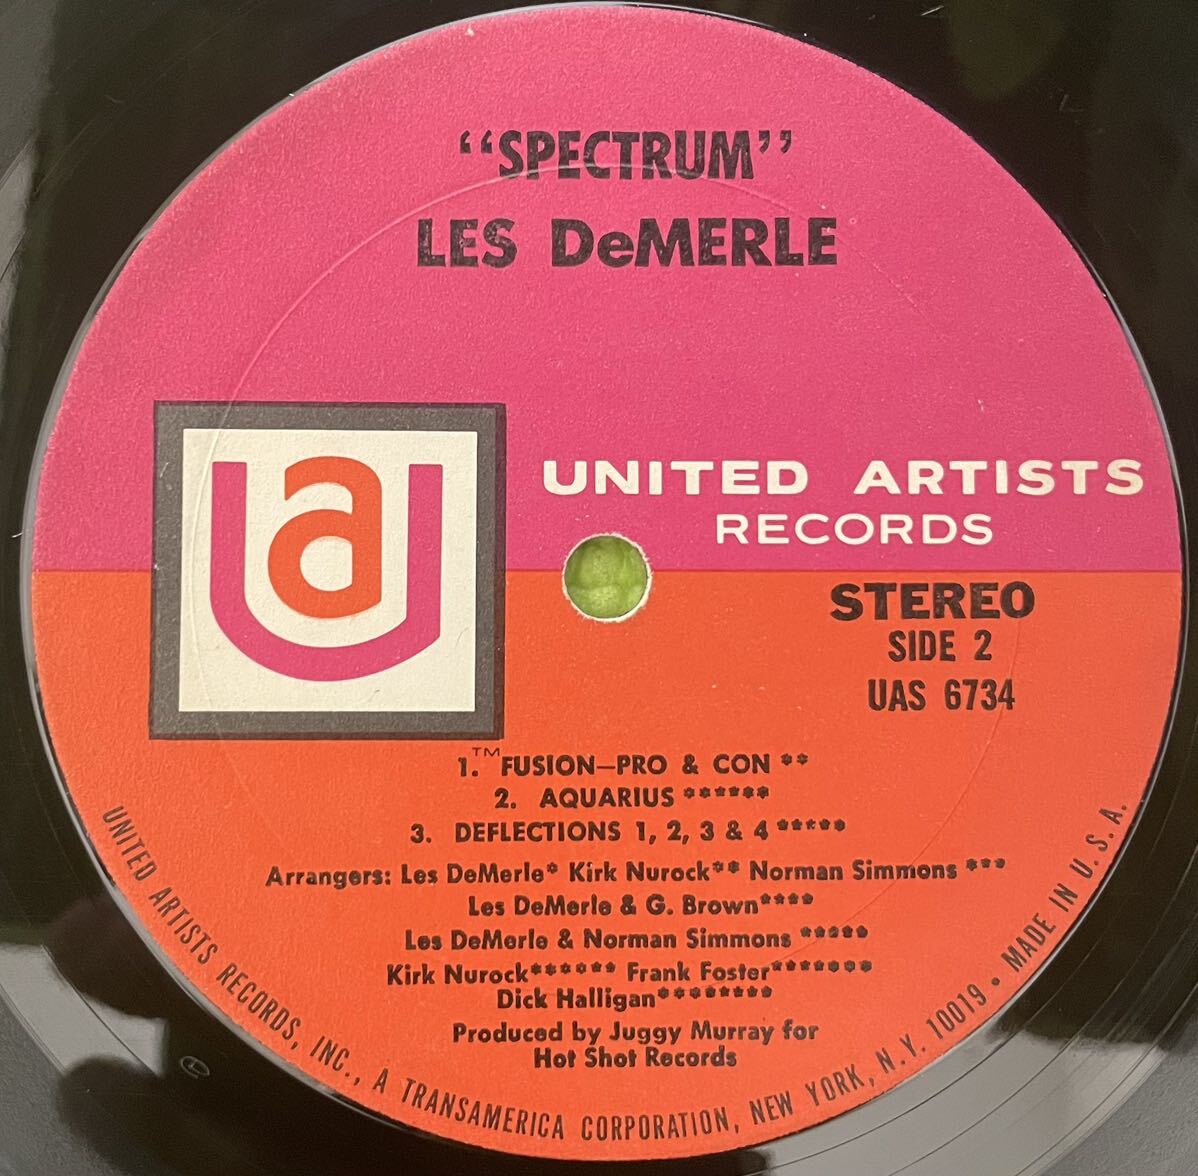 Jazz sampling raregroove record ジャズ サンプリング レアグルーブ レコード Les Demerle Spectrum(LP) 1969の画像4